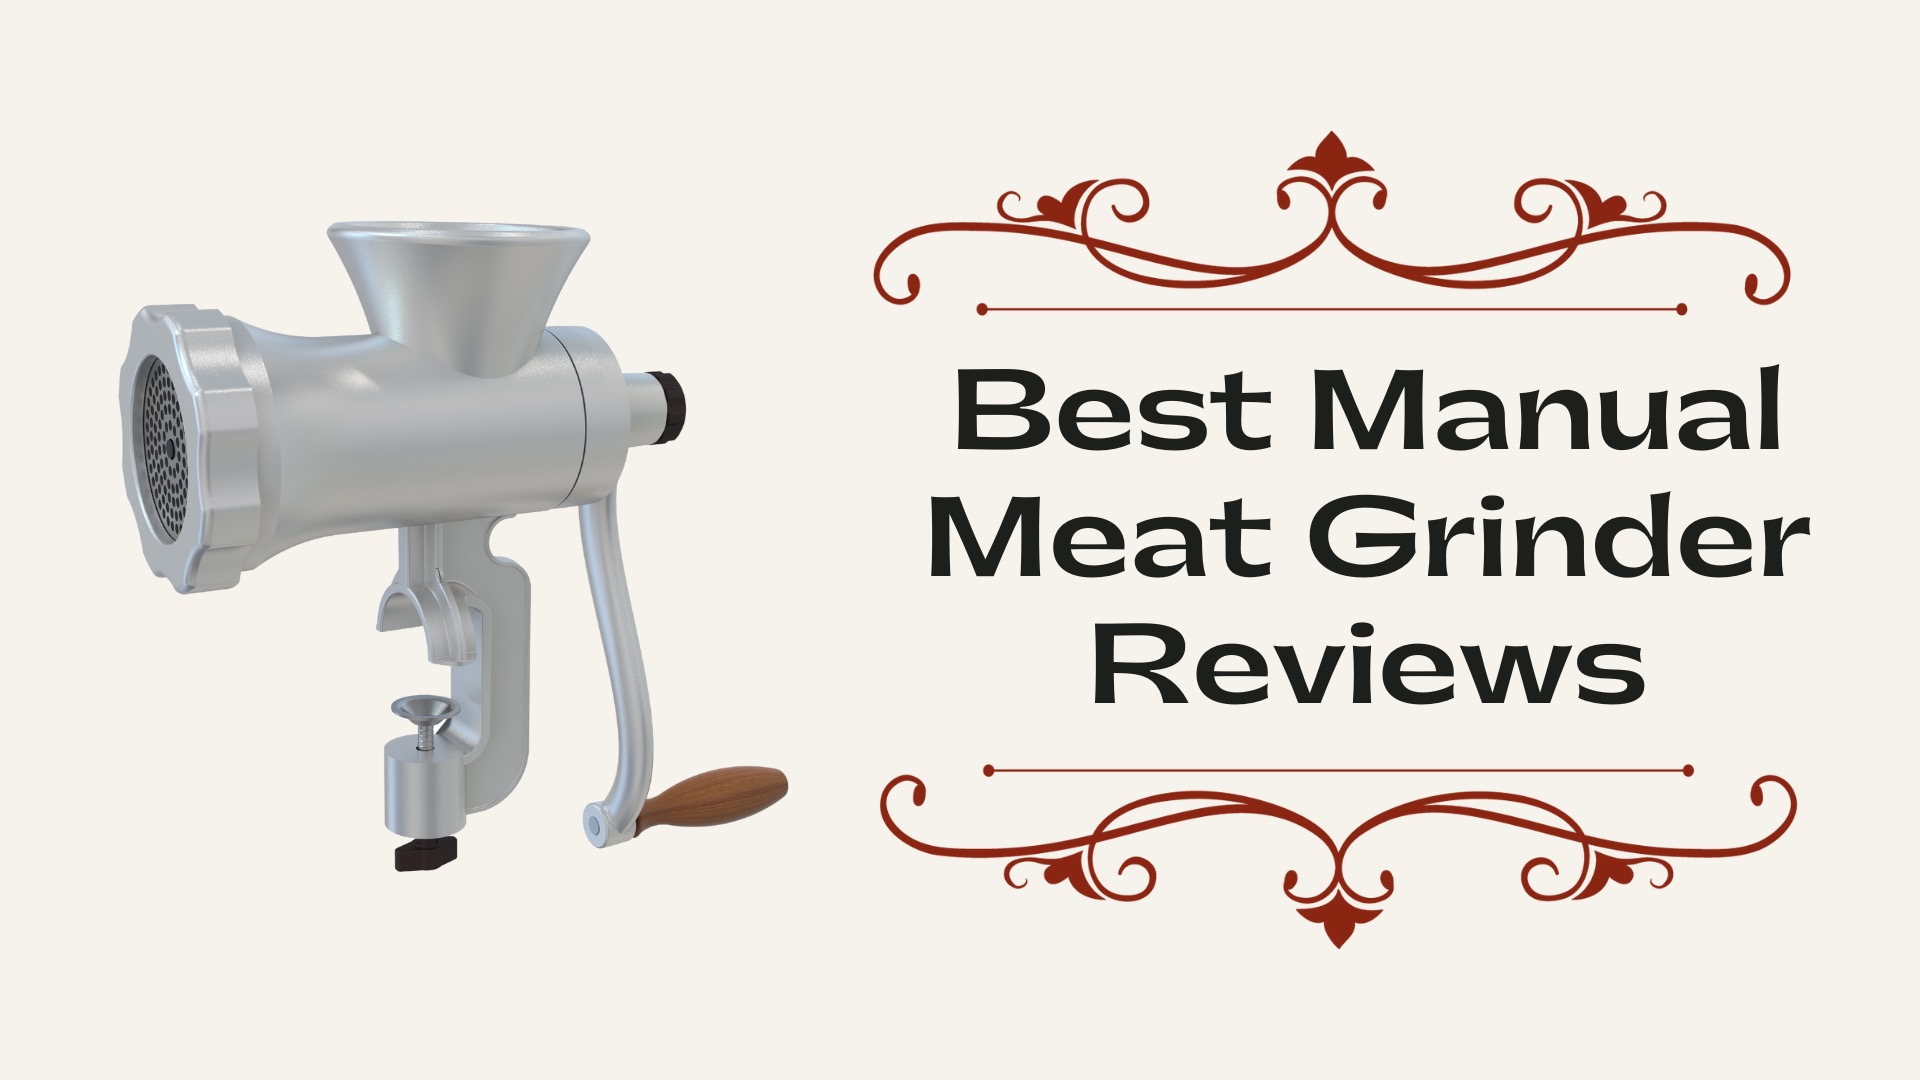 Best Manual Meat Grinder Reviews